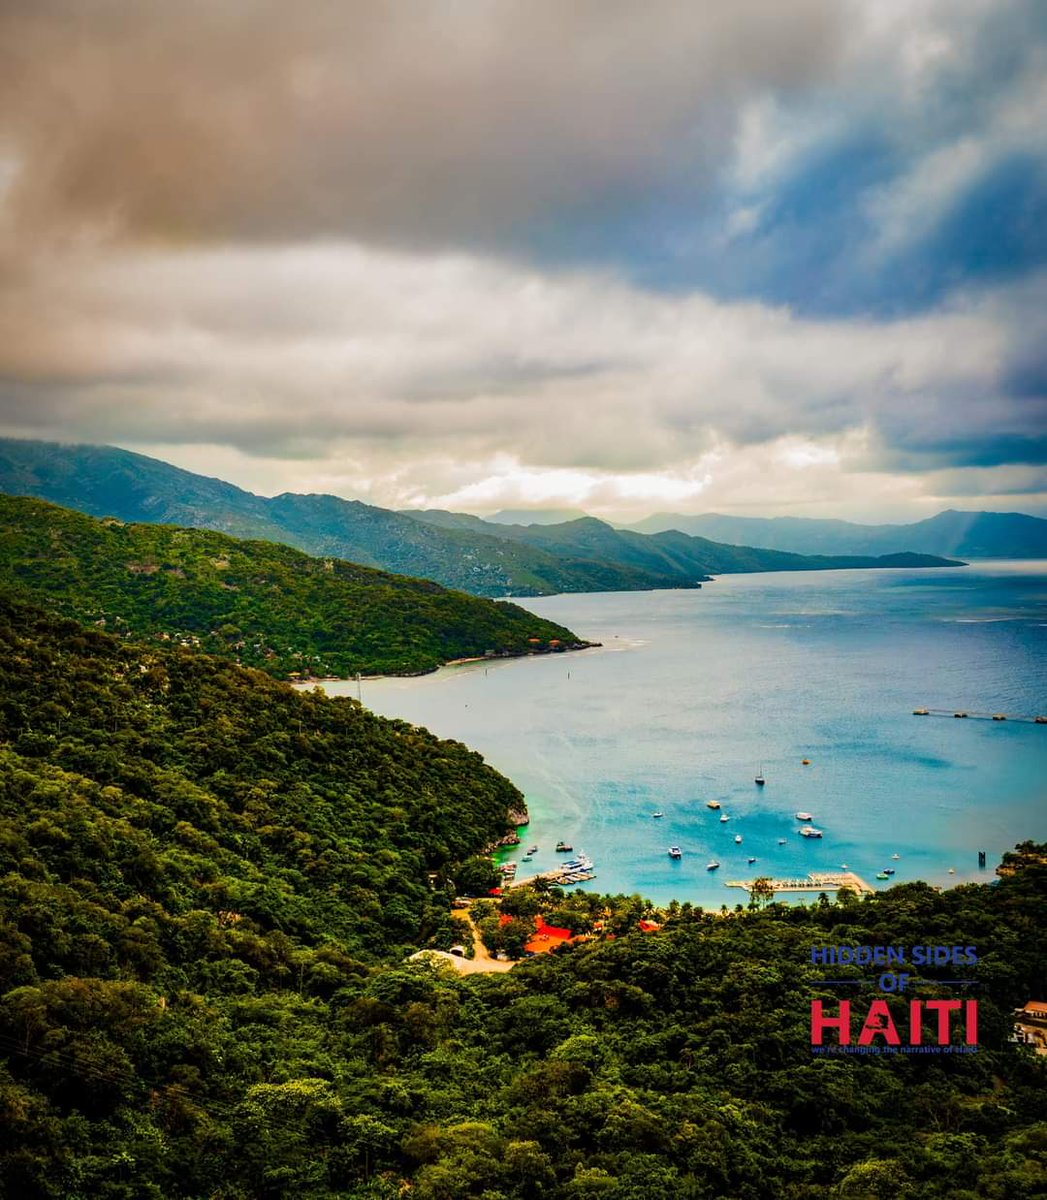 📍This is Haiti🇭🇹
The Haiti 🇭🇹 the medias don't Show.the lung of the Caribbean.
📸 hiddensidesofhaiti